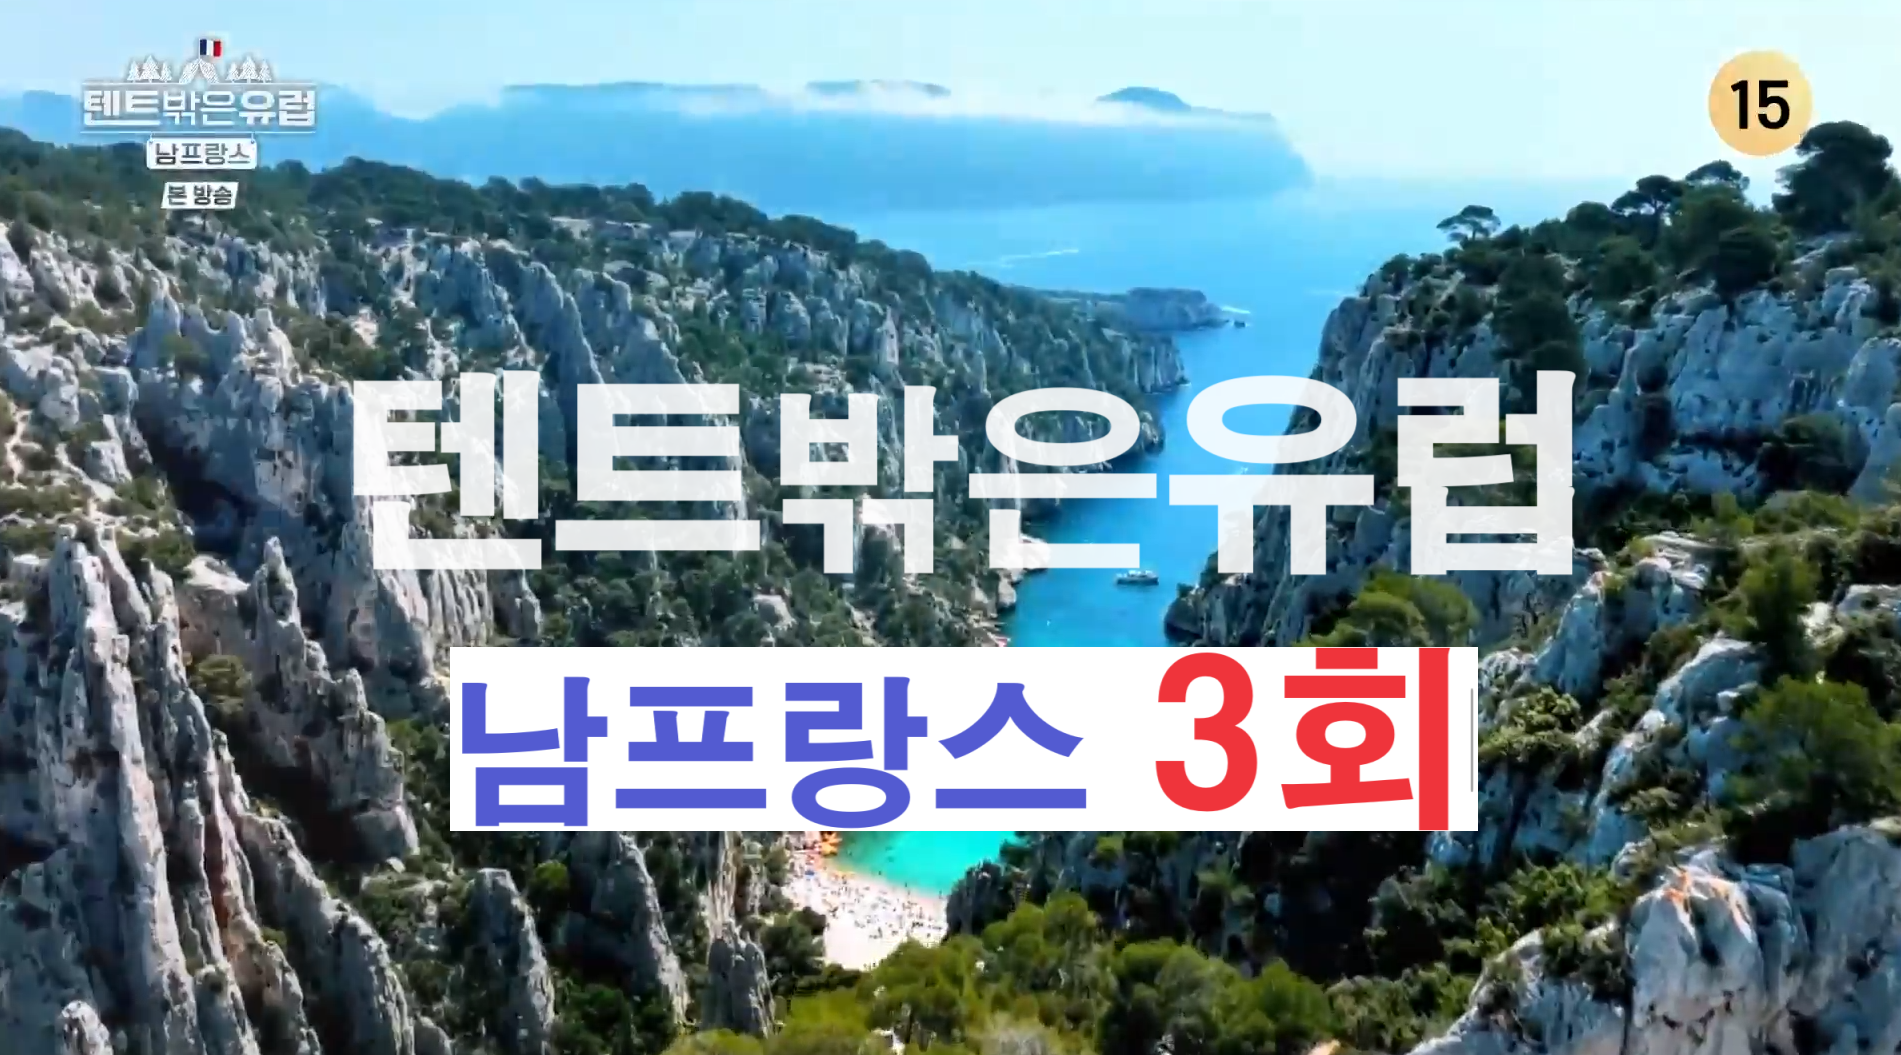 tvN &quot;텐트 밖은 유럽 - 남프랑스&quot; 3회&#44; 베르동 협곡 안녕&#44; 프랑스에서 먹는 닭볶음탕과 배추전